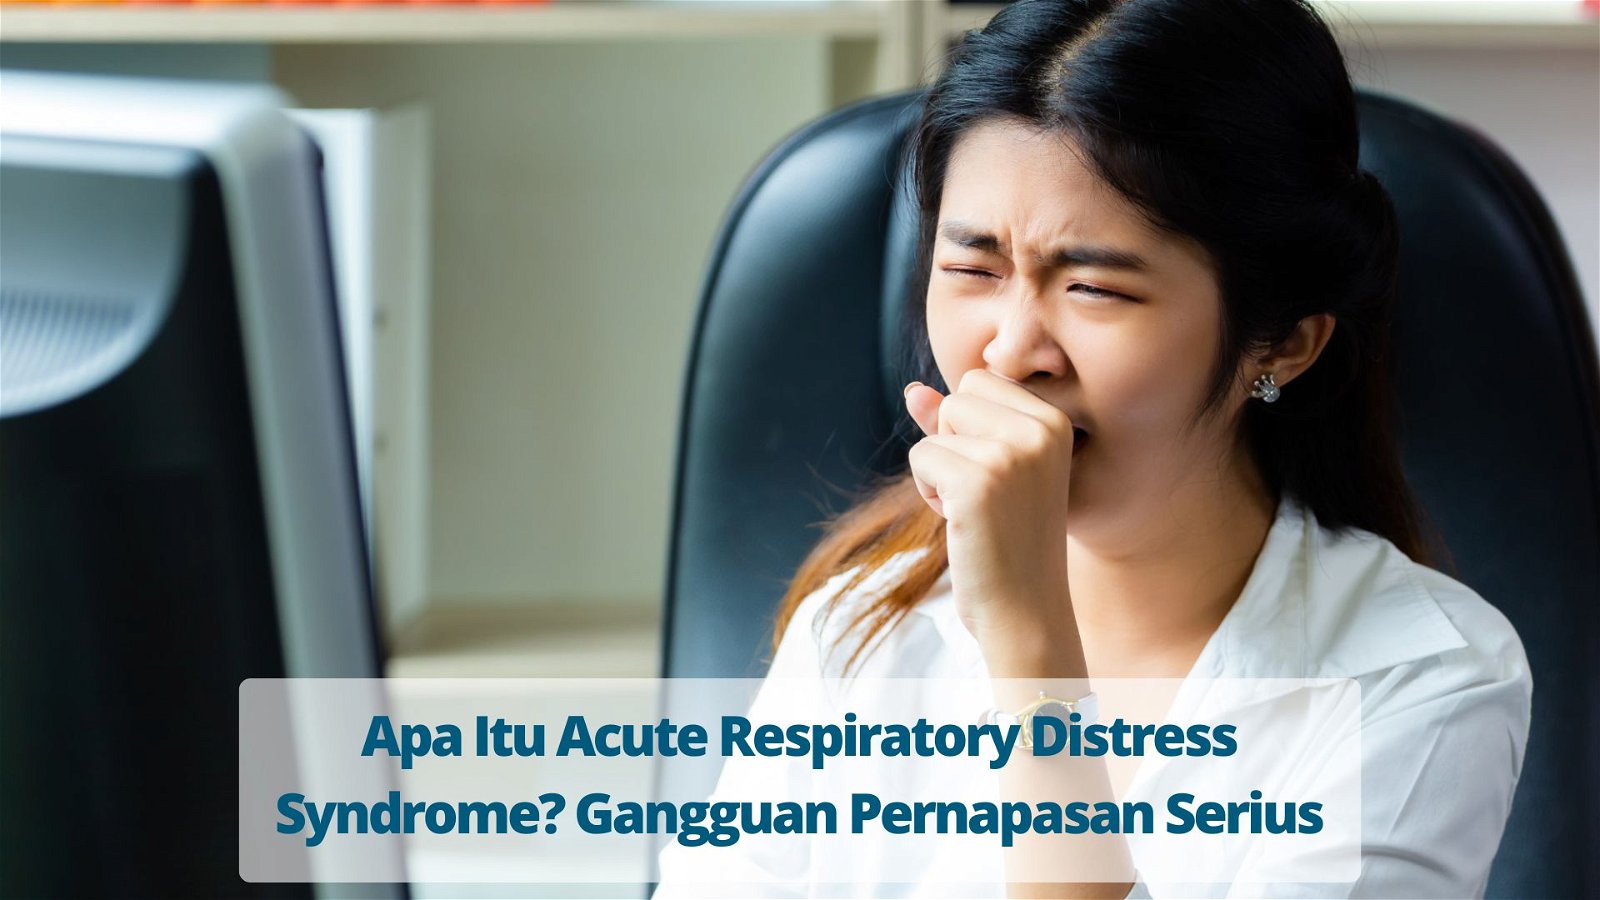 Apa Itu Acute Respiratory Distress Syndrome? Gangguan Pernapasan Serius